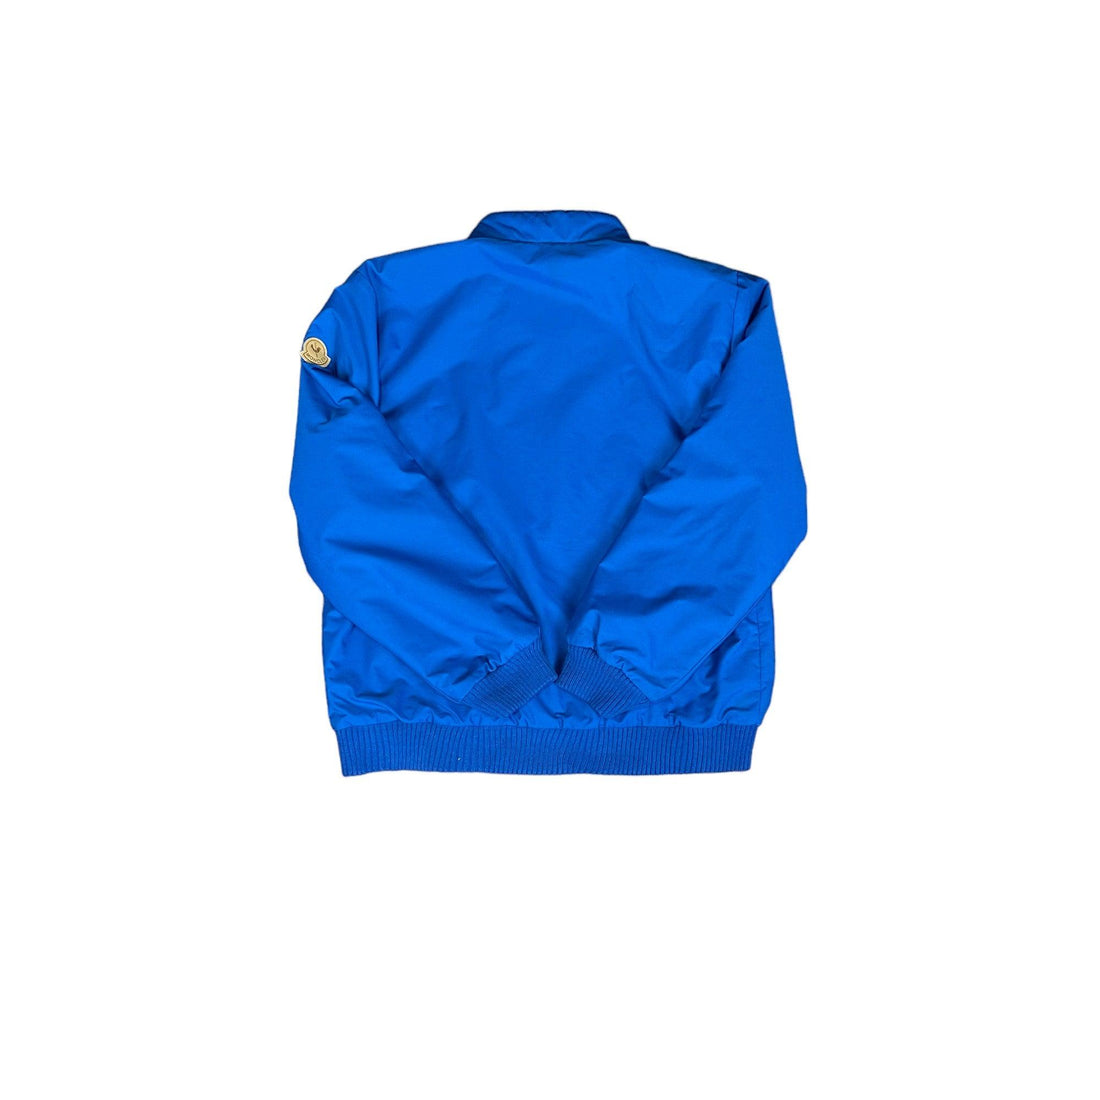 Vintage 90s Blue Moncler Fleece Lined Jacket - Medium - The Streetwear Studio